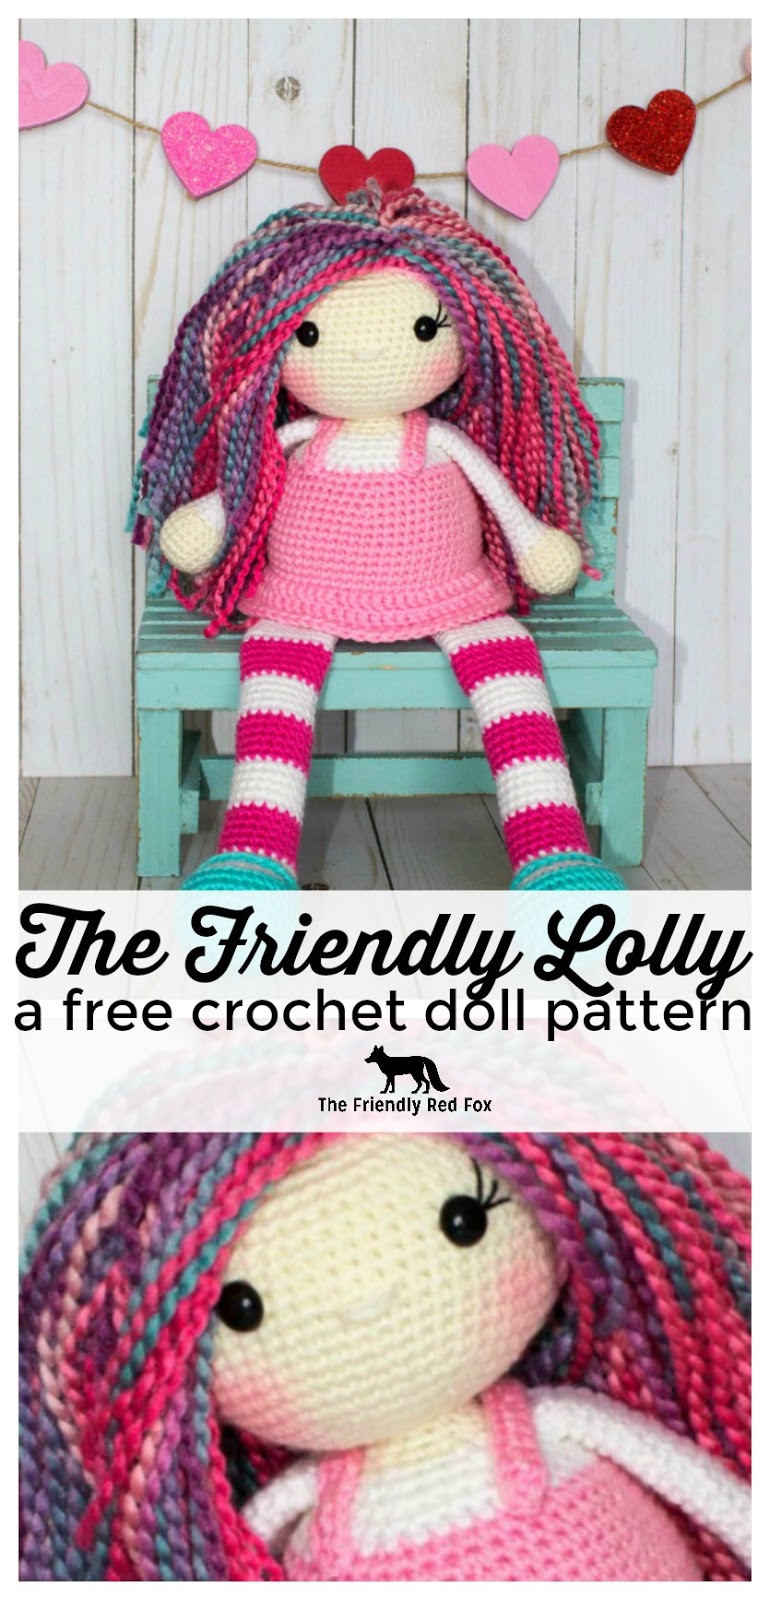 Crochet Doll Pattern, Amigurumi Crochet Doll, Red-haired Girl